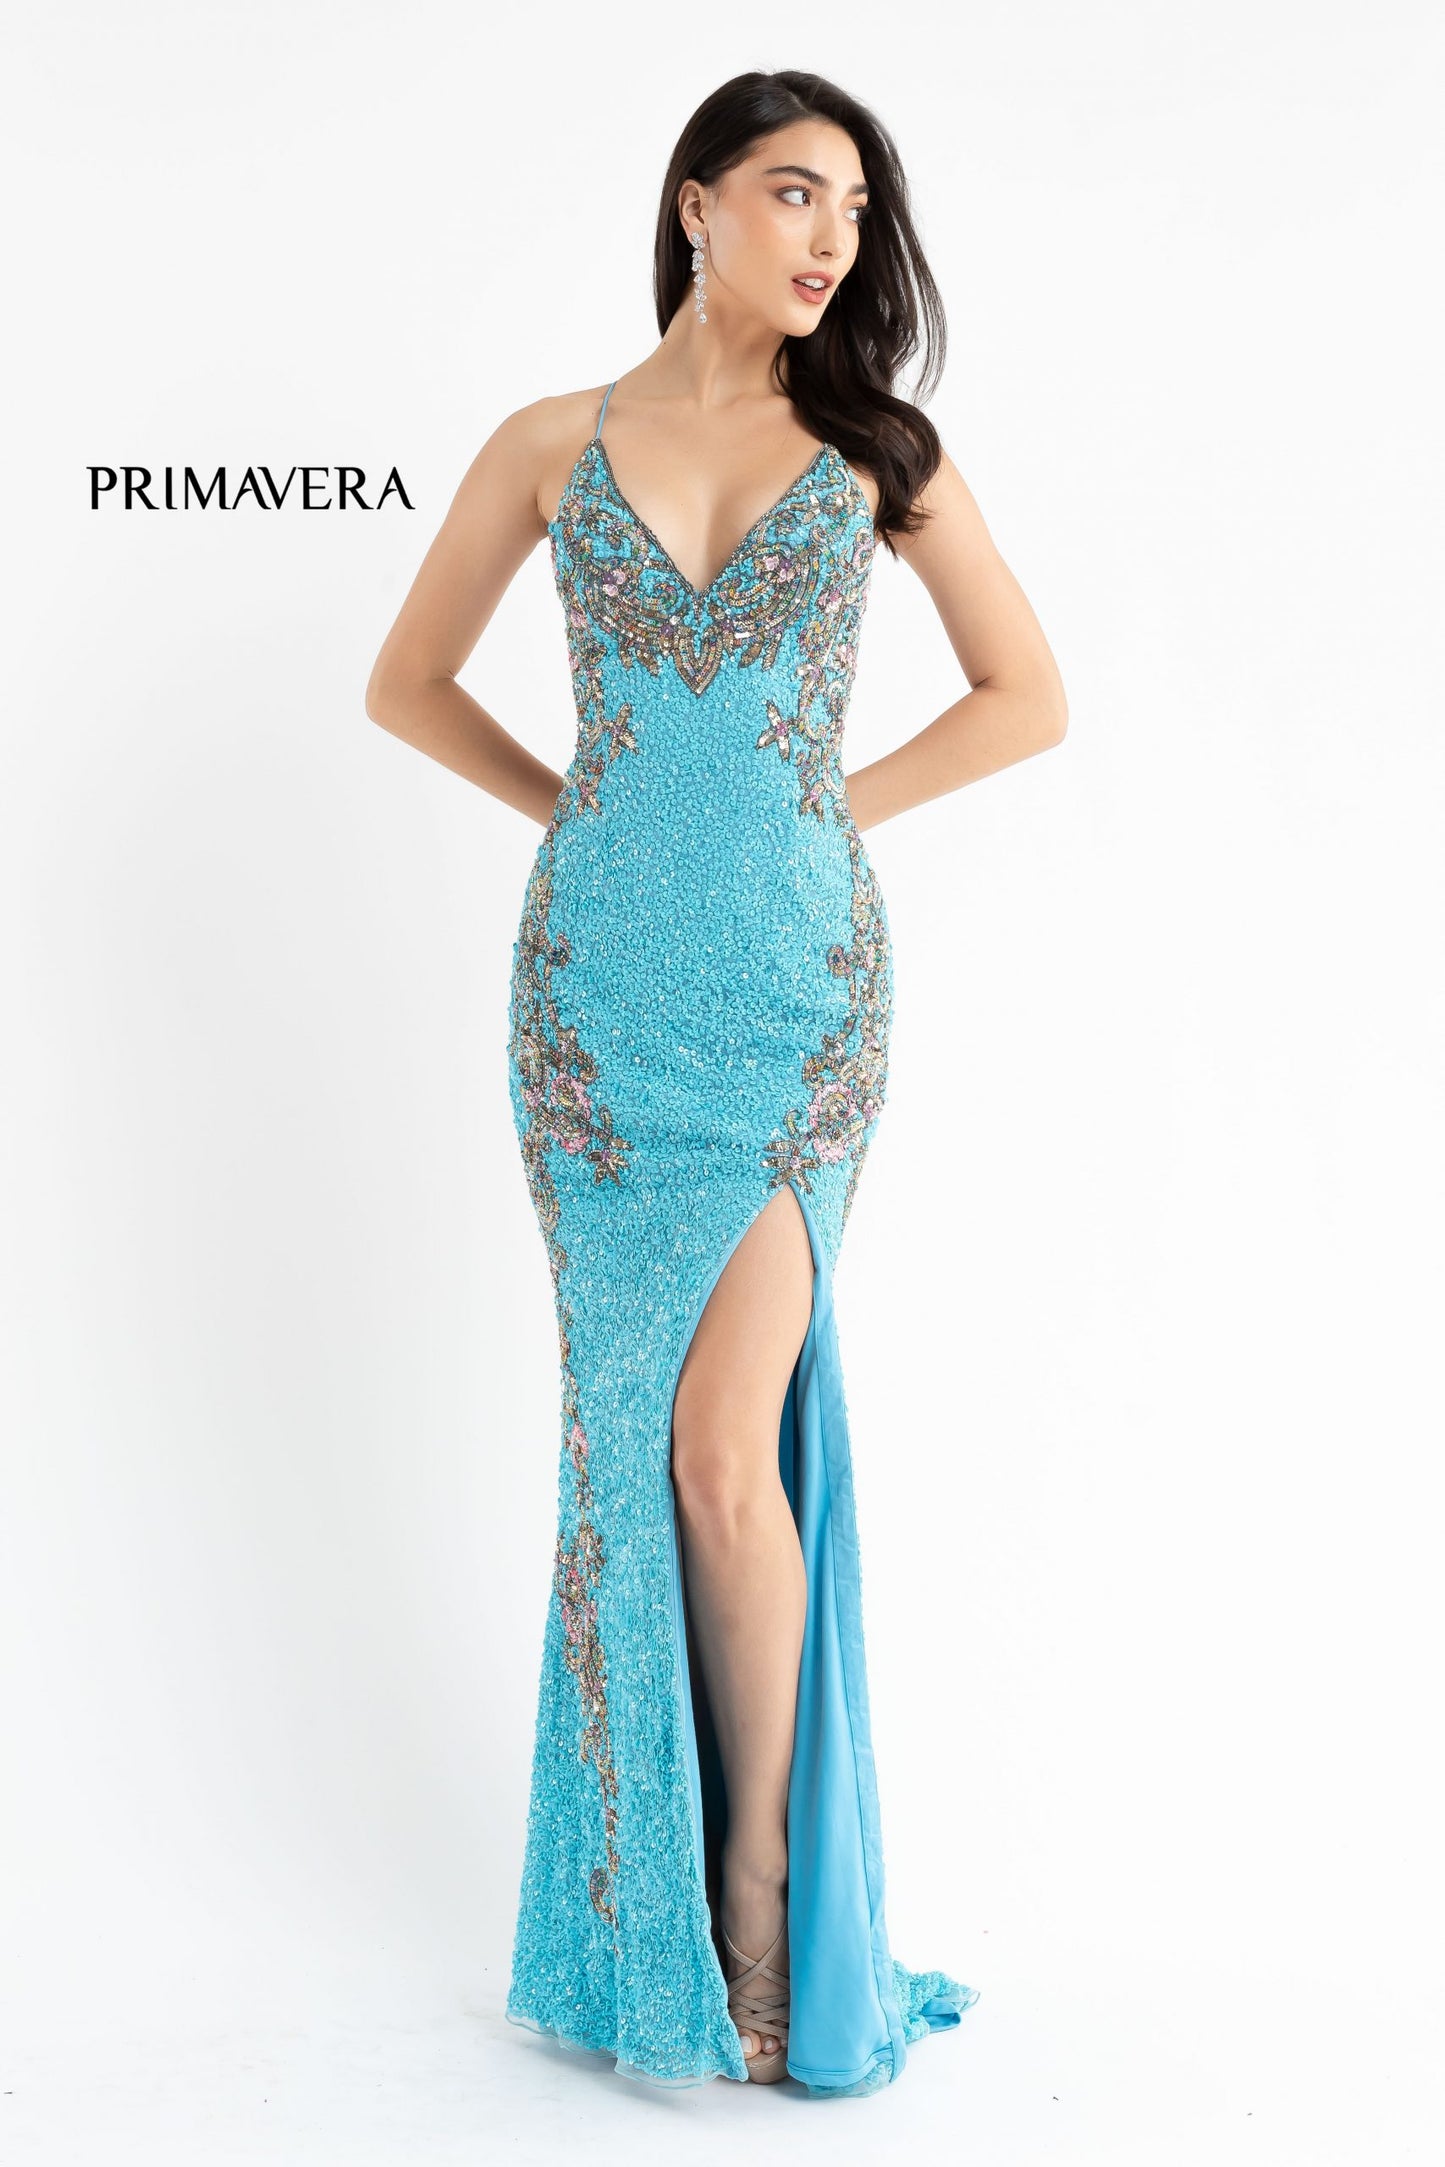 Primavera-Couture-3211-Turquoise-prom-dress-front-2-v-neckline-floral-sequins-lace-up-tie-back-slit